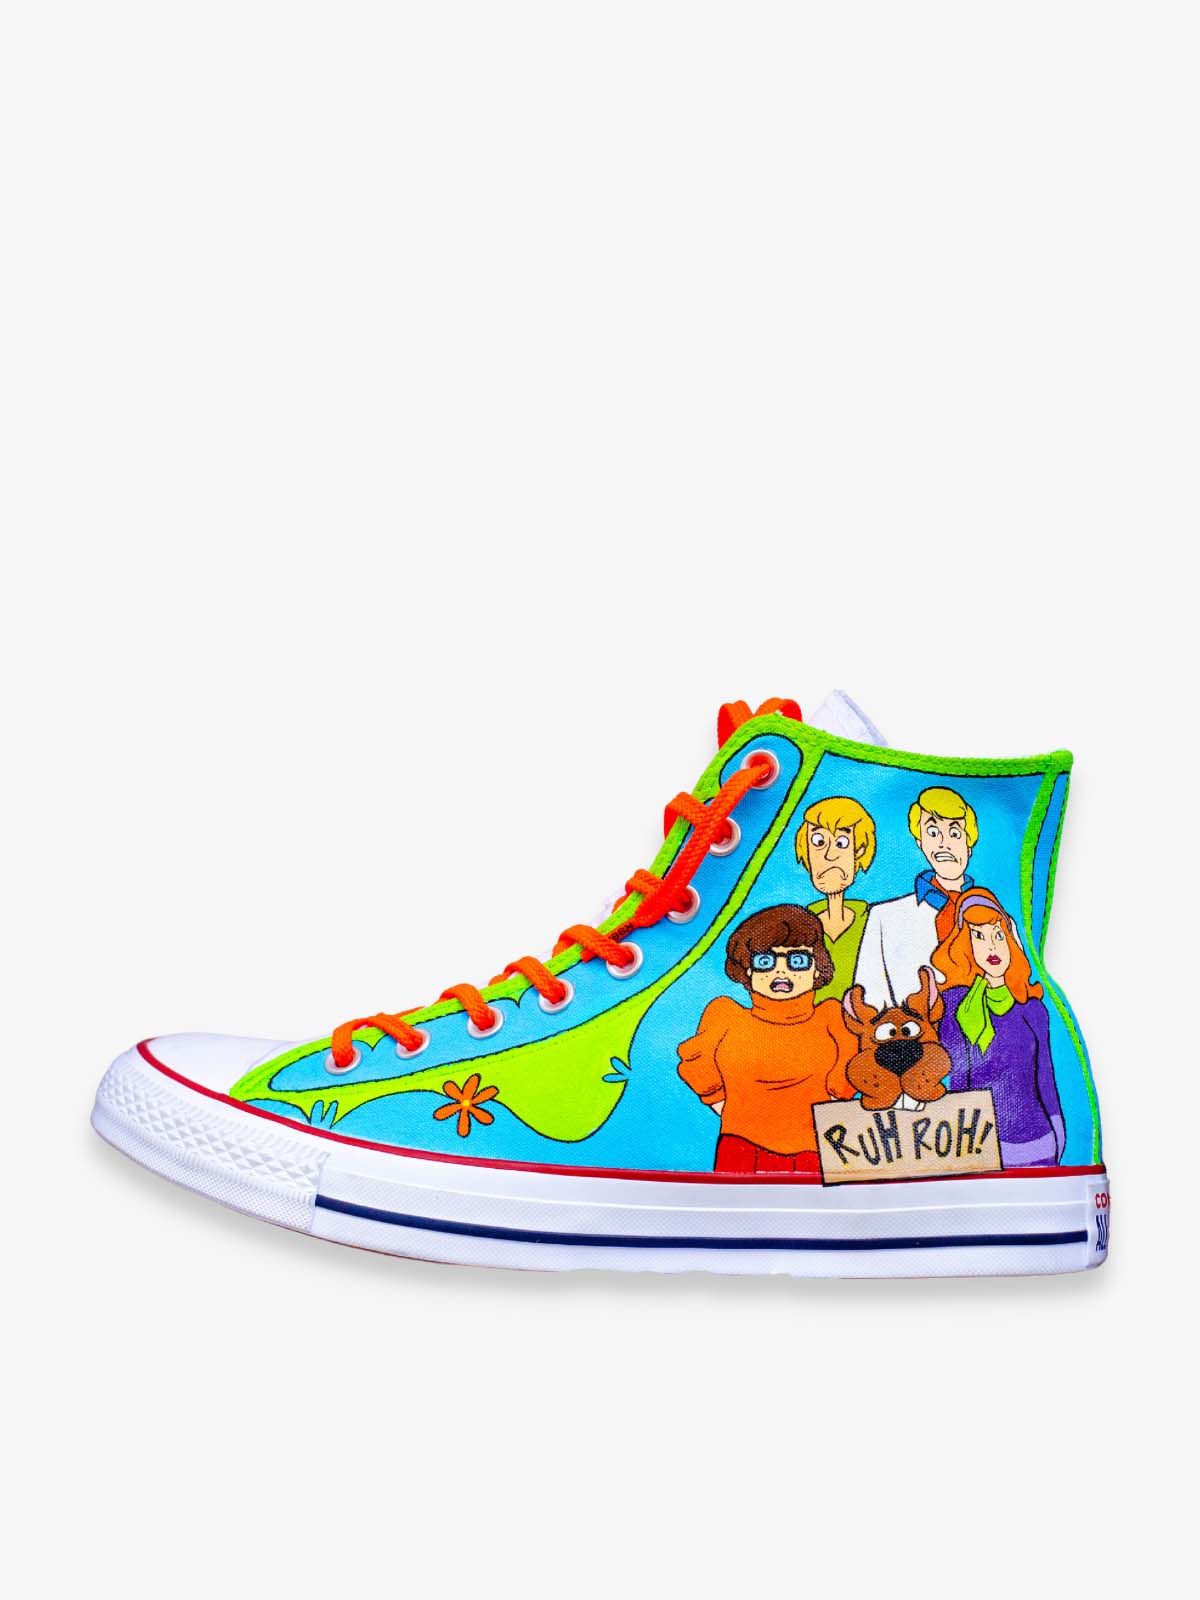 Scooby Doo Custom Converse